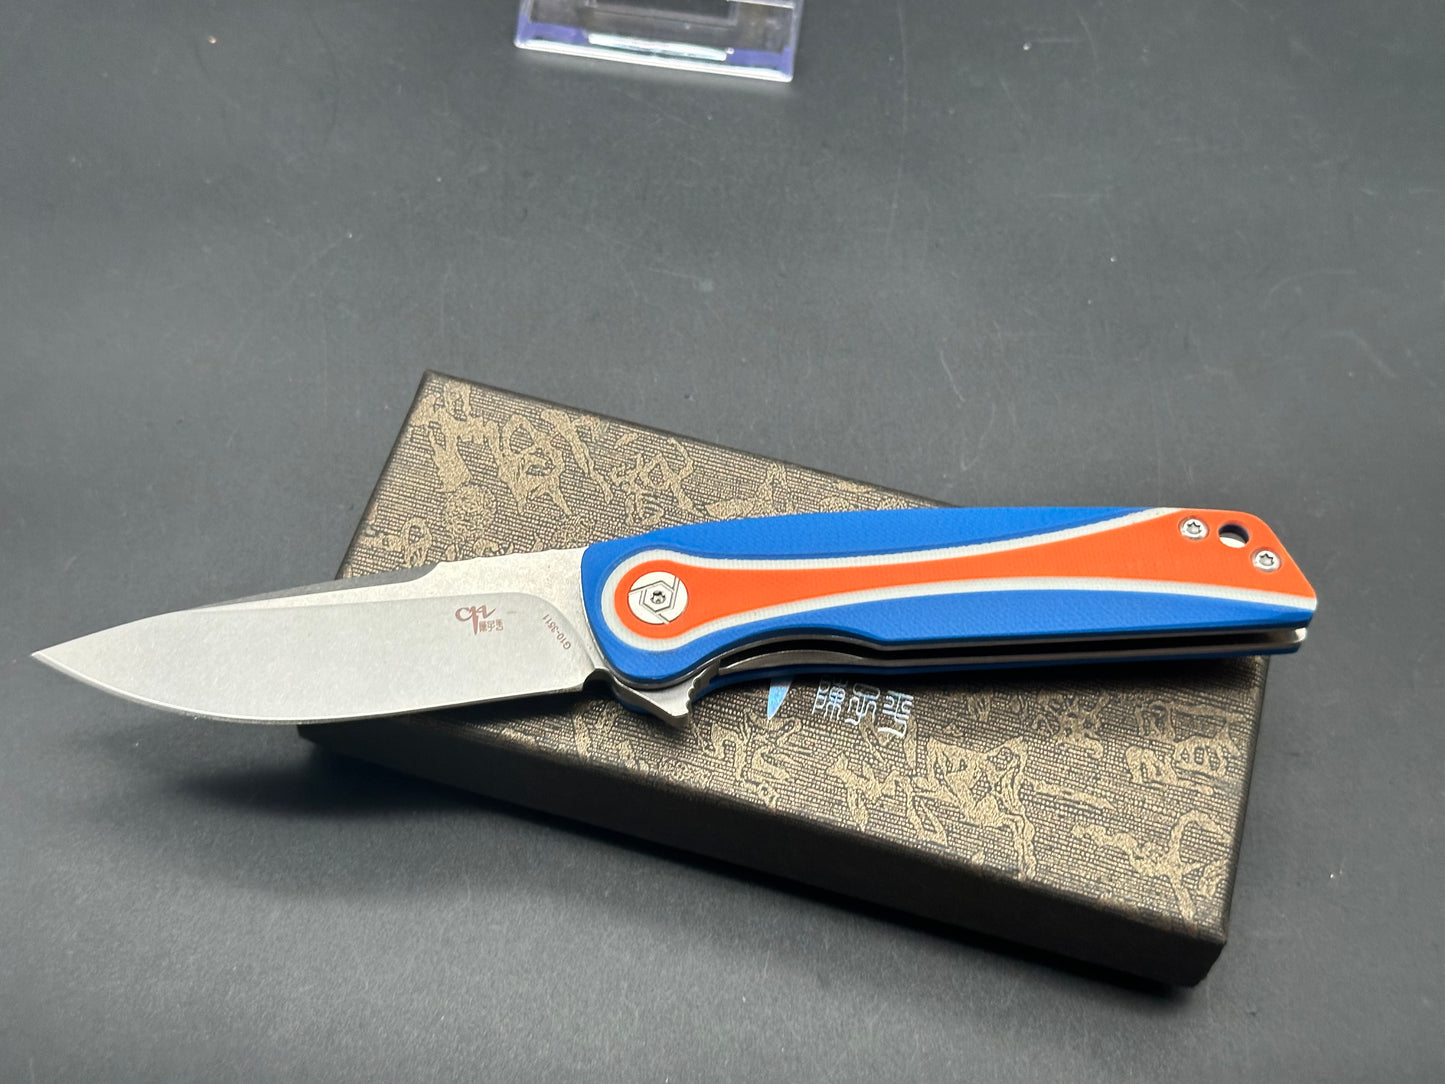 CH KNIVES CH3511-BL-OR G10 FOLDER KNIFE BLUE & ORANGE G10 HANDLE